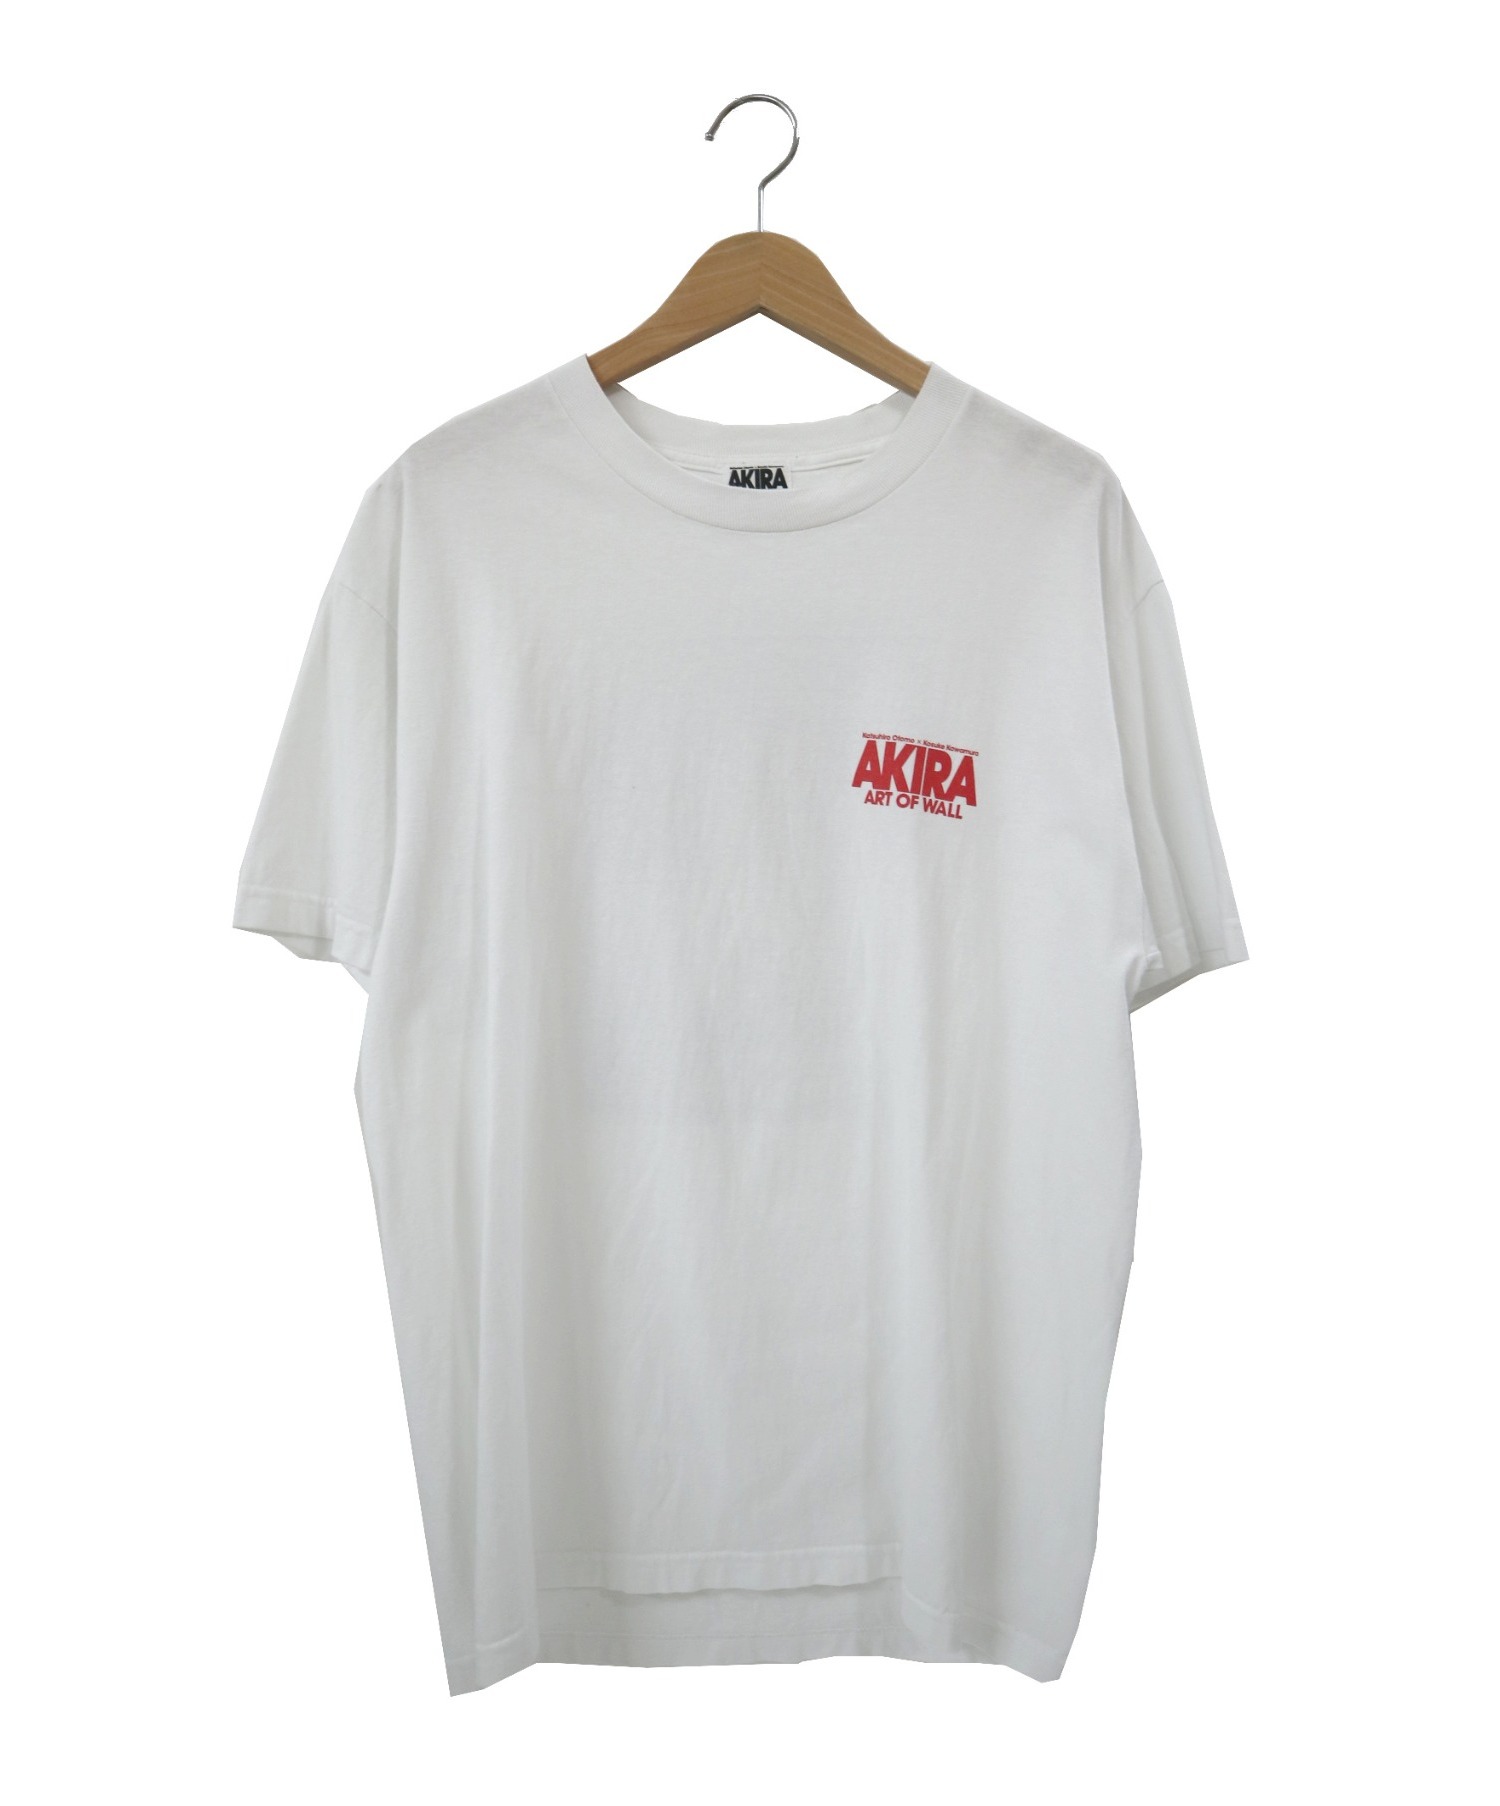 AKIRA art of wall Tシャツ L size - Tシャツ/カットソー(半袖/袖なし)